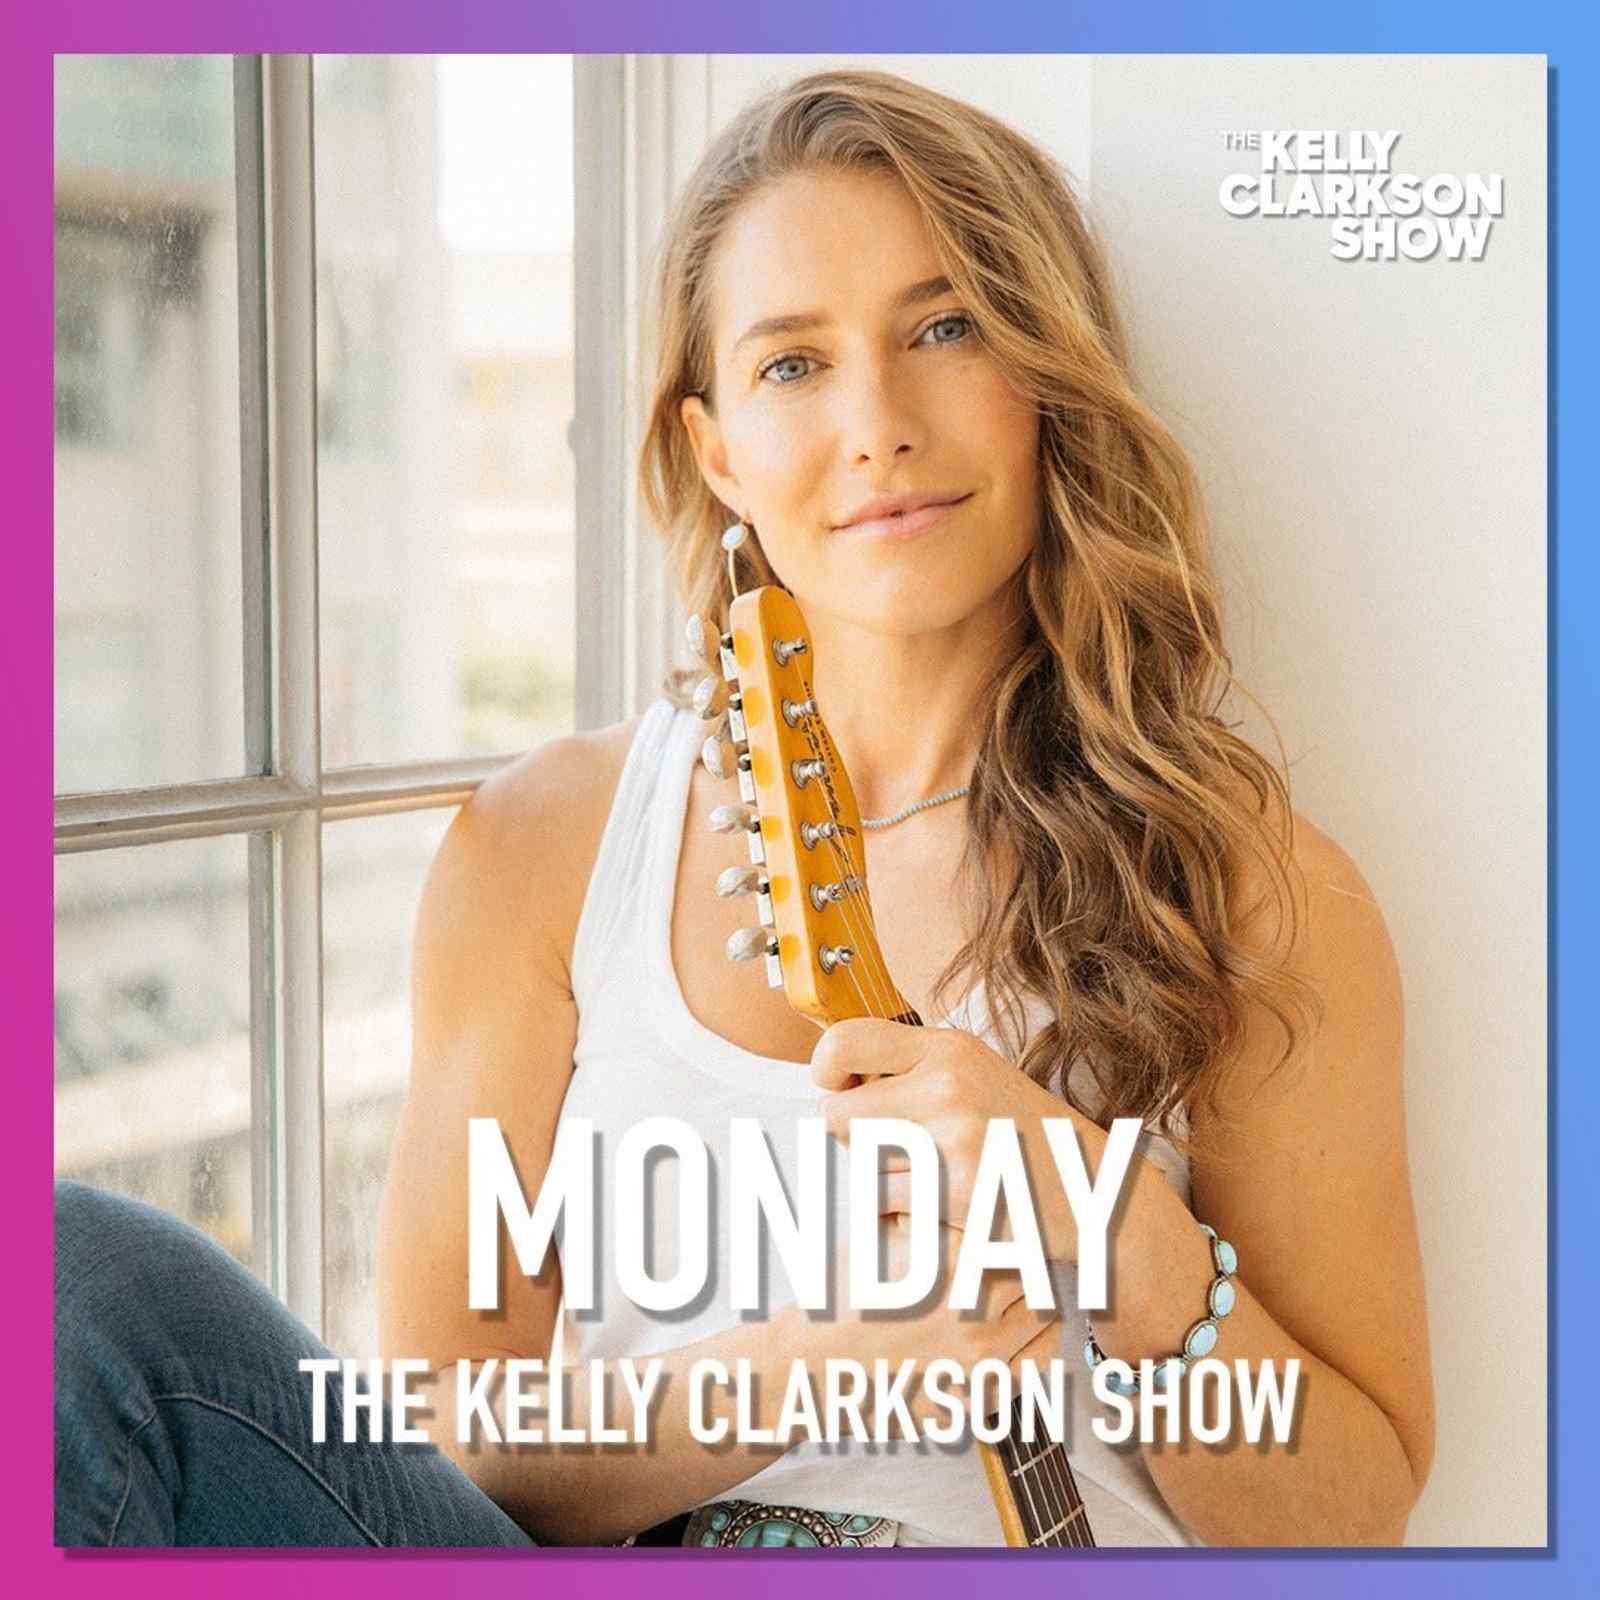 The Kelly Clarkson Show: Caroline Jones